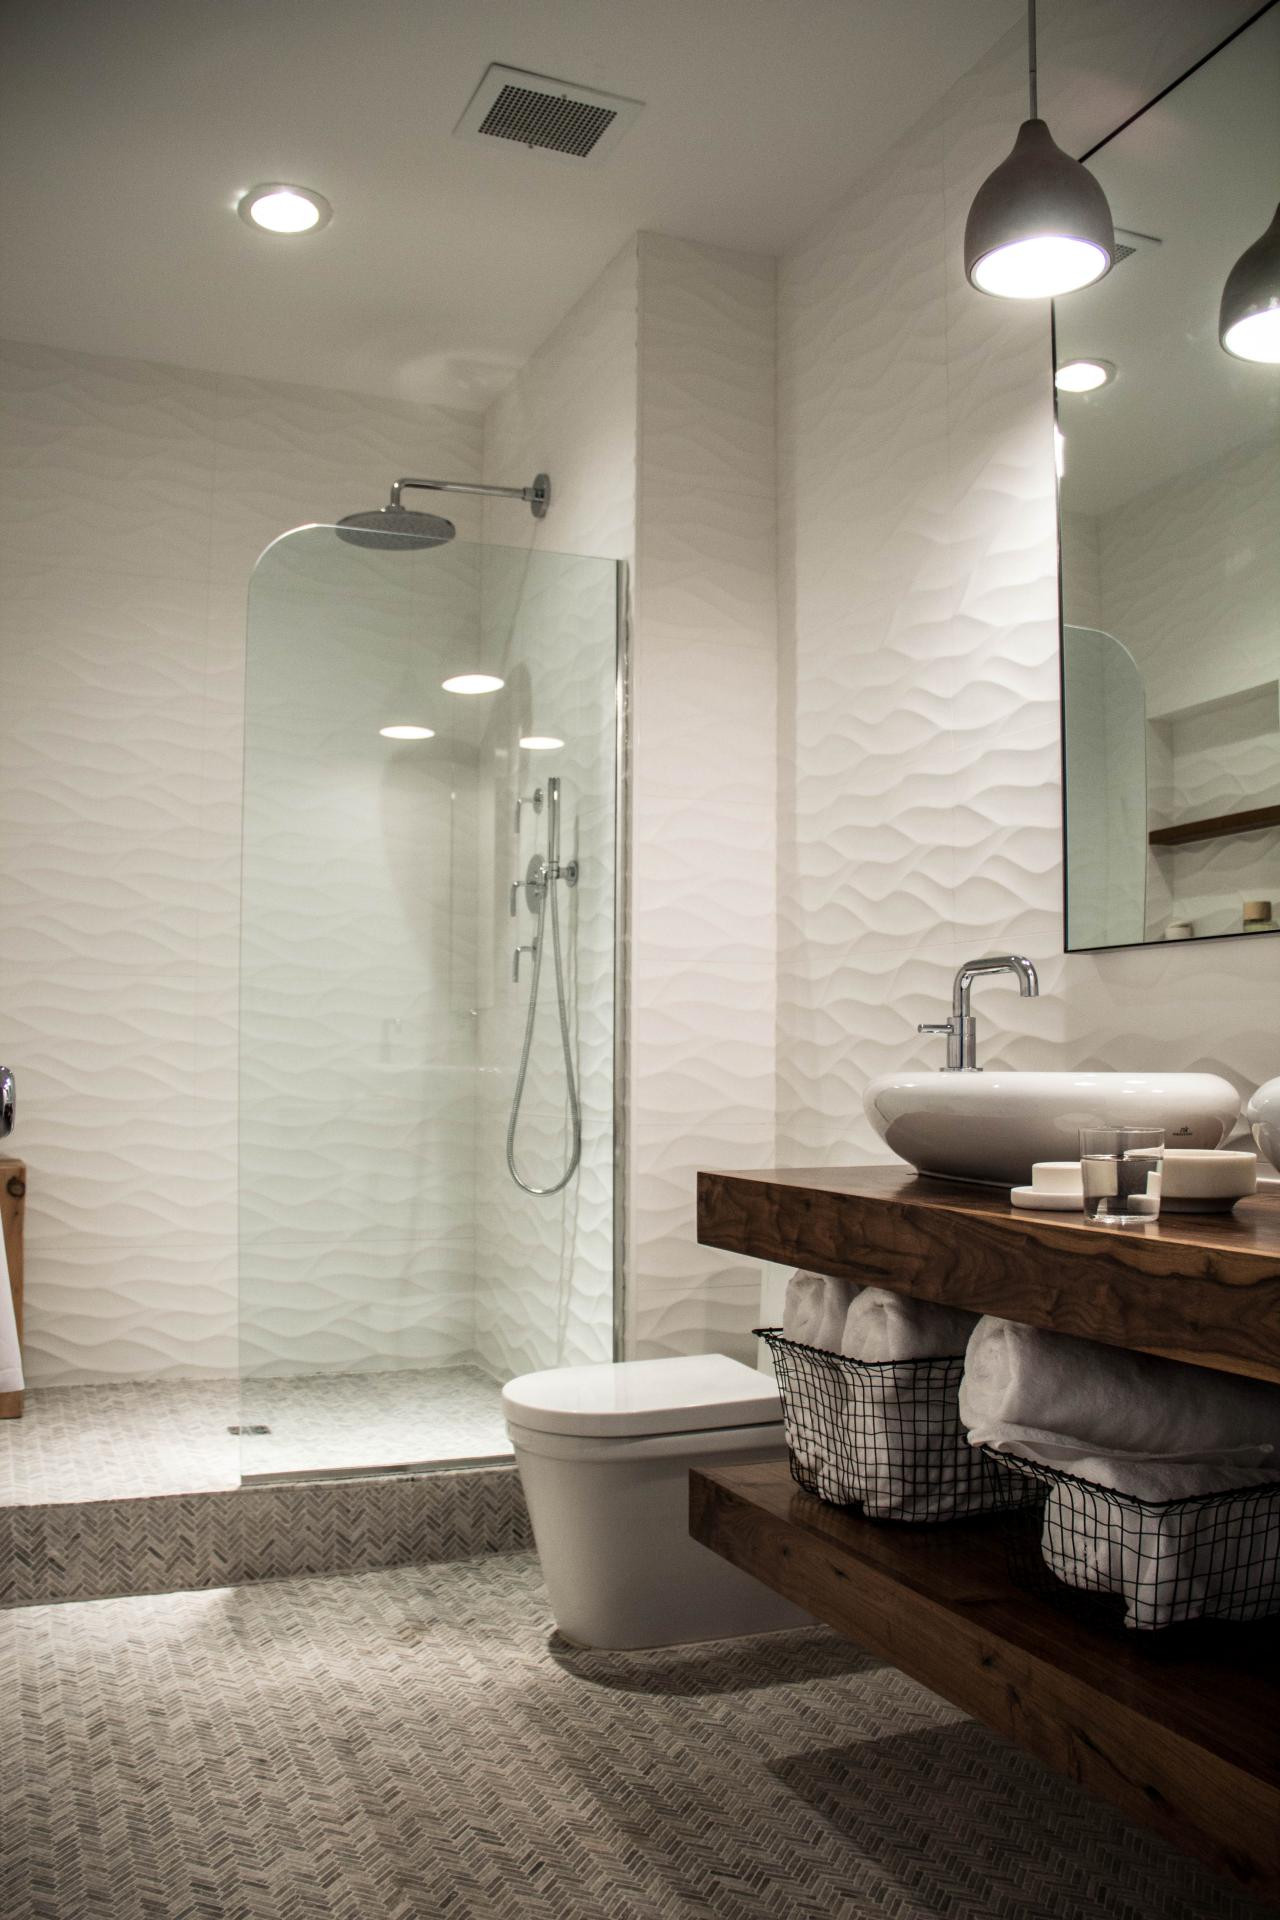 Bathroom Walk In Shower
 10 Walk In Shower Designs To Upgrade Your Bathroom